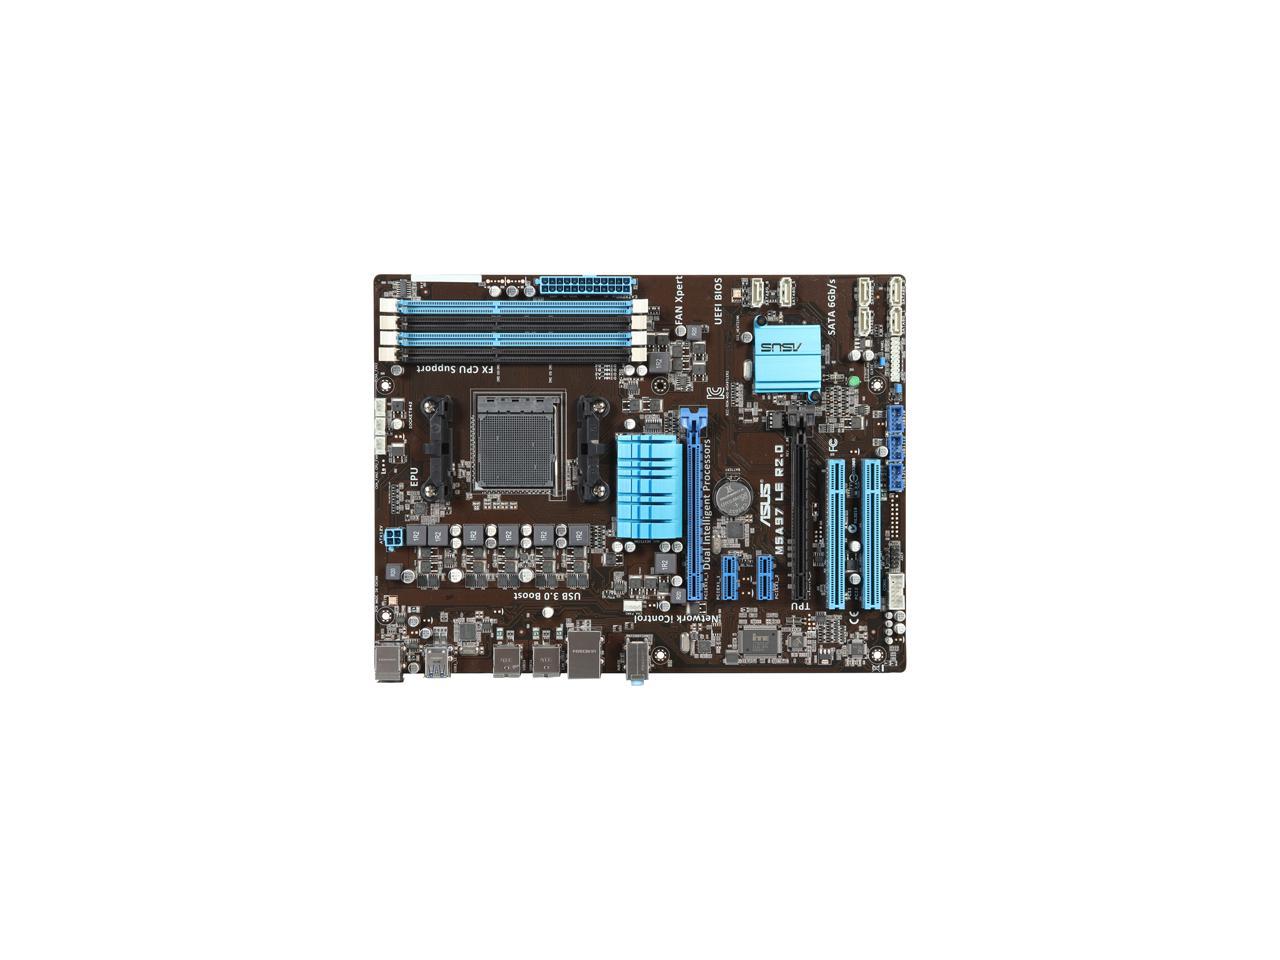 Refurbished: ASUS M5A97 LE R2.0 AM3+ ATX AMD Motherboard with UEFI BIOS